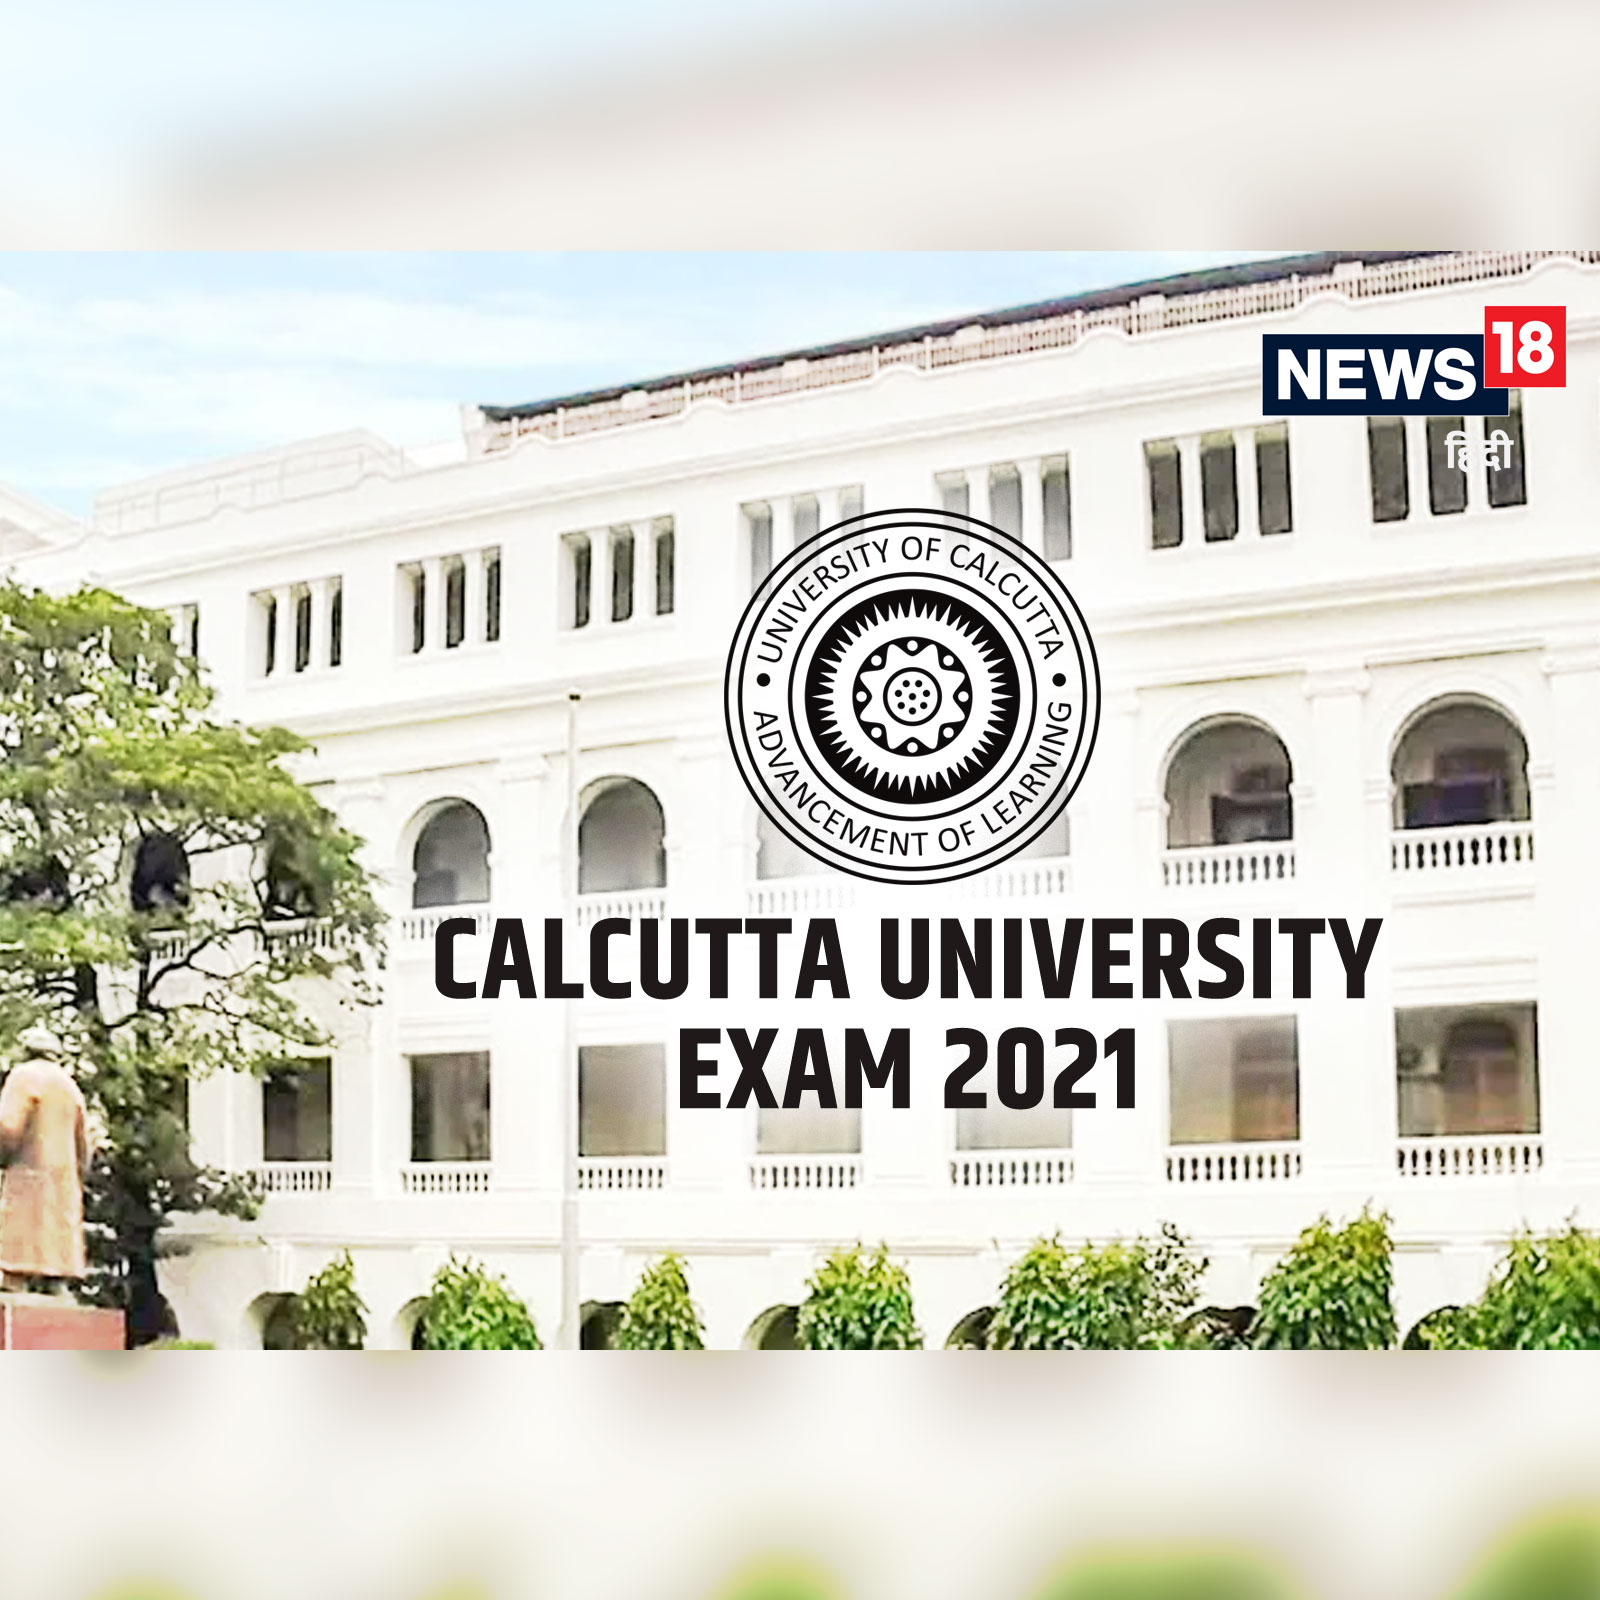 University of Calcutta logo | University of calcutta, University, Calcutta